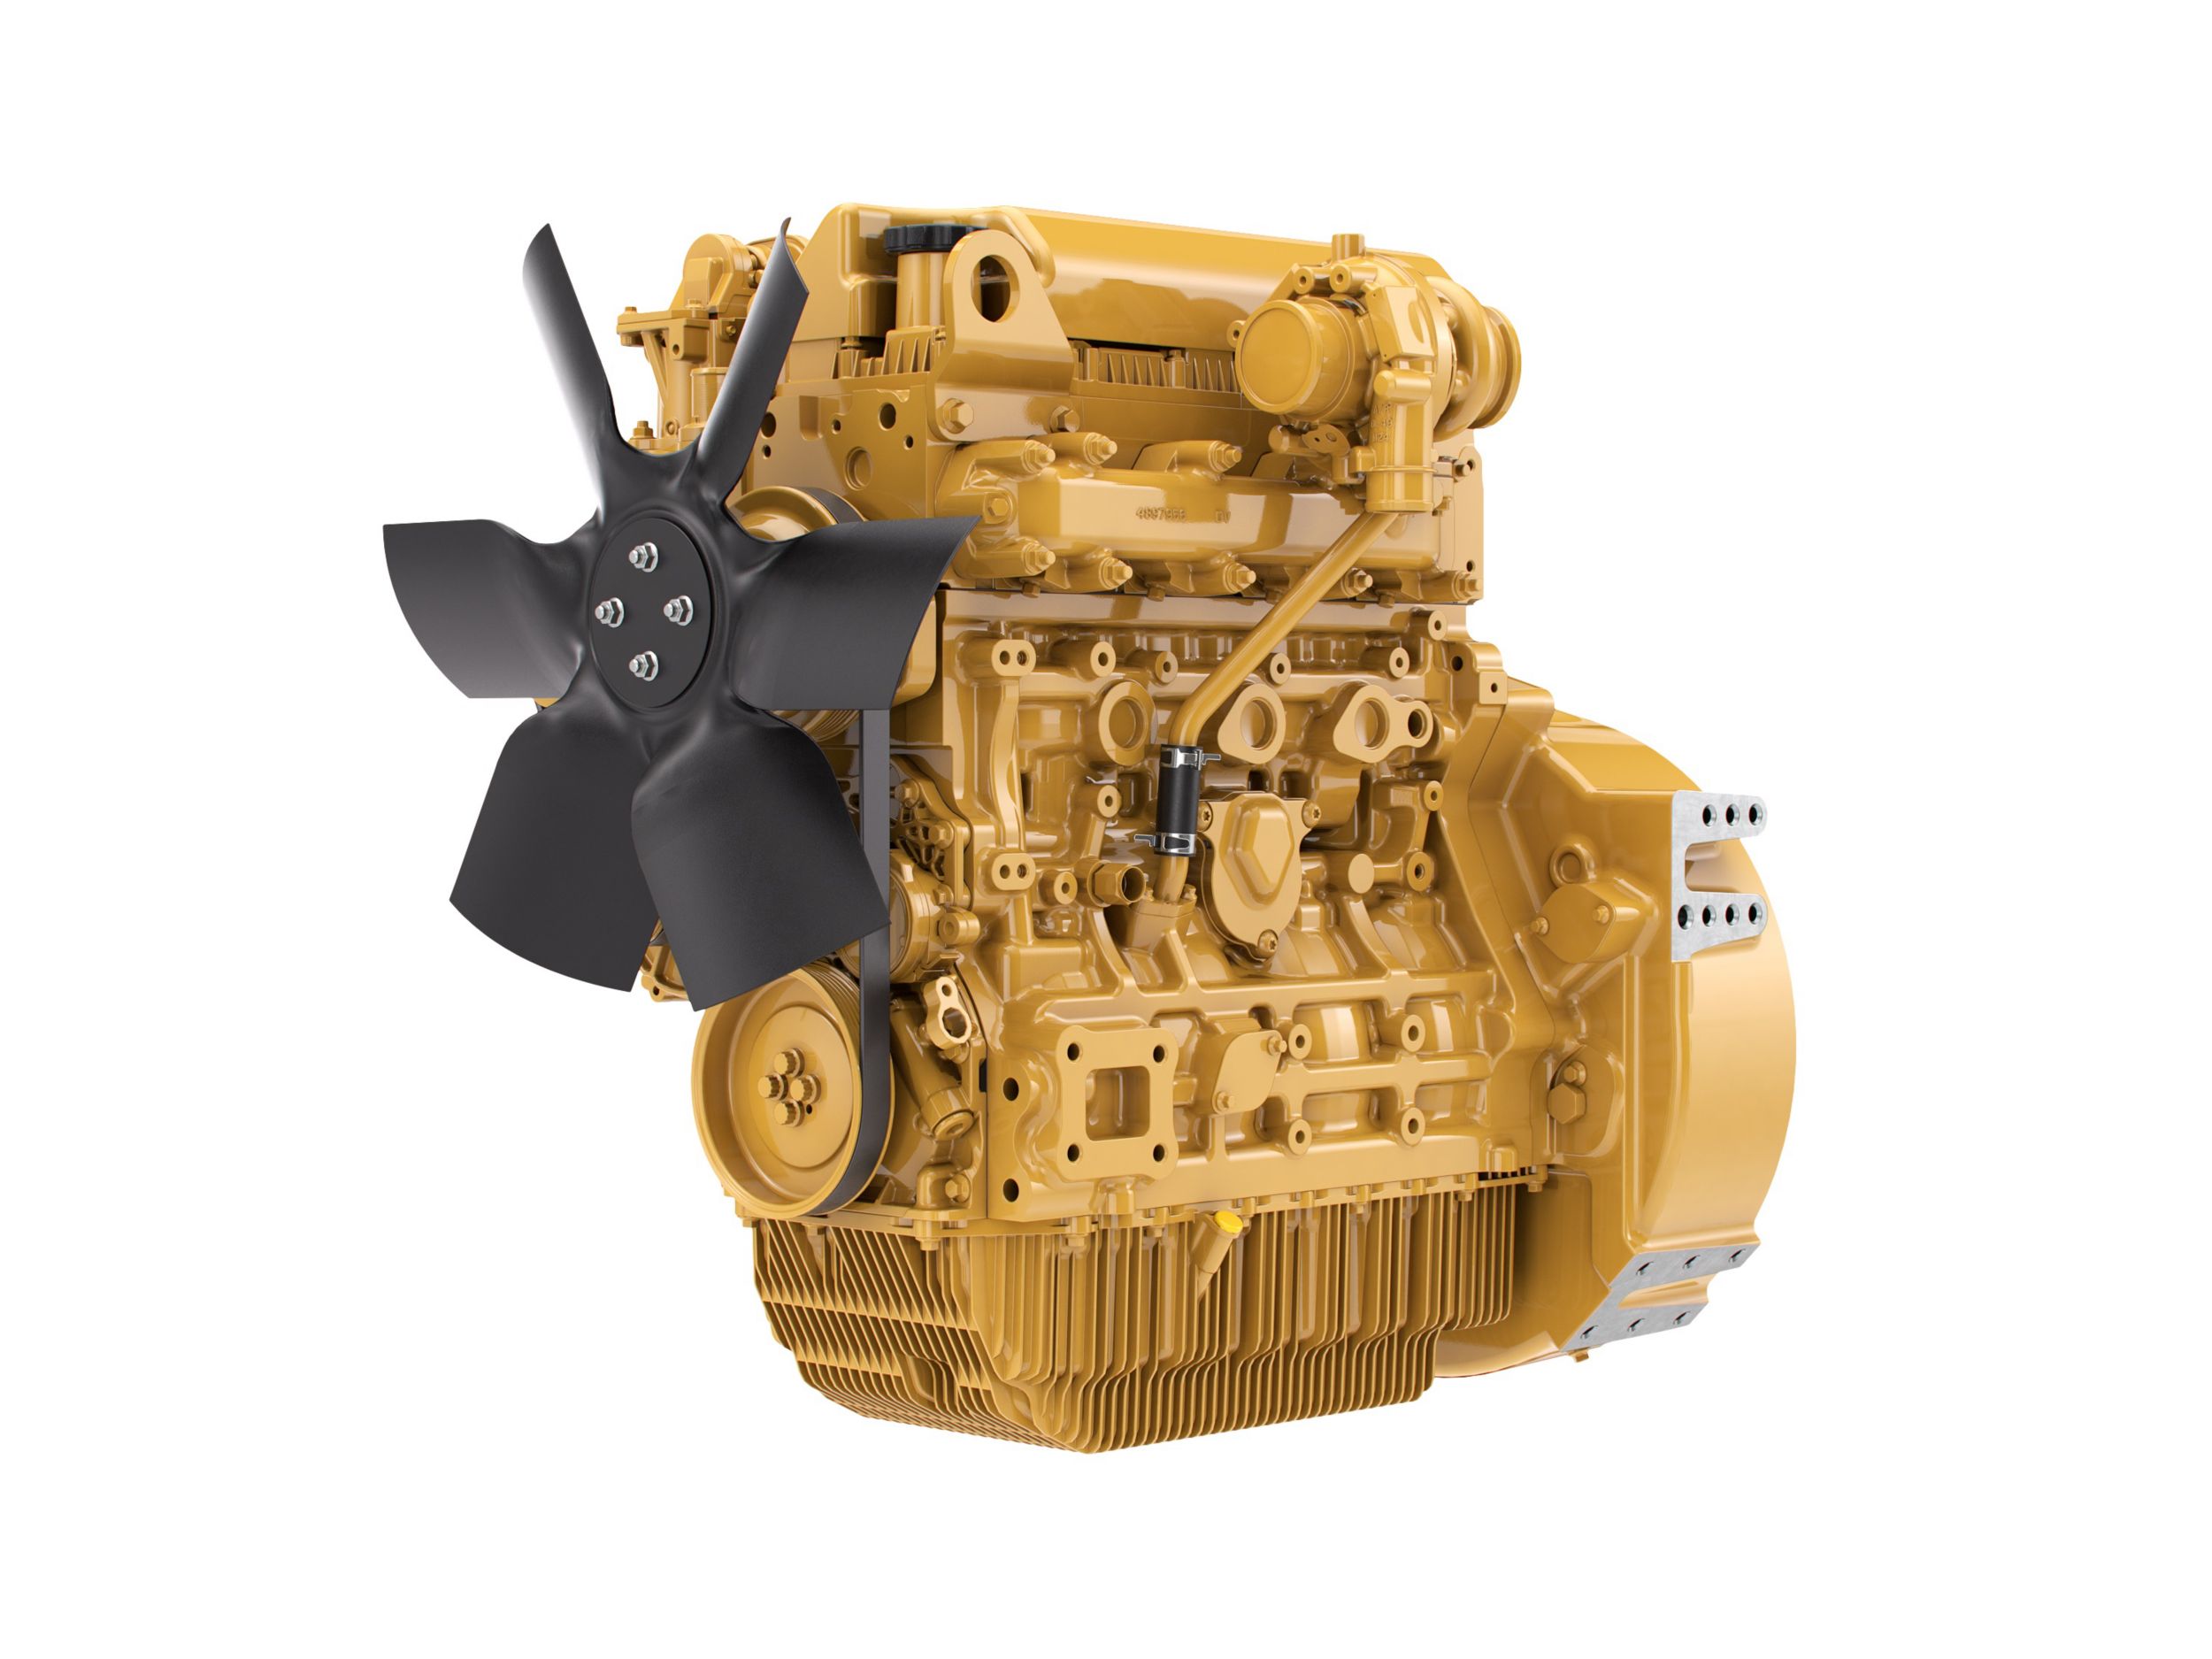 C3.4B Tier 4 Diesel Engines - Highly Regulated